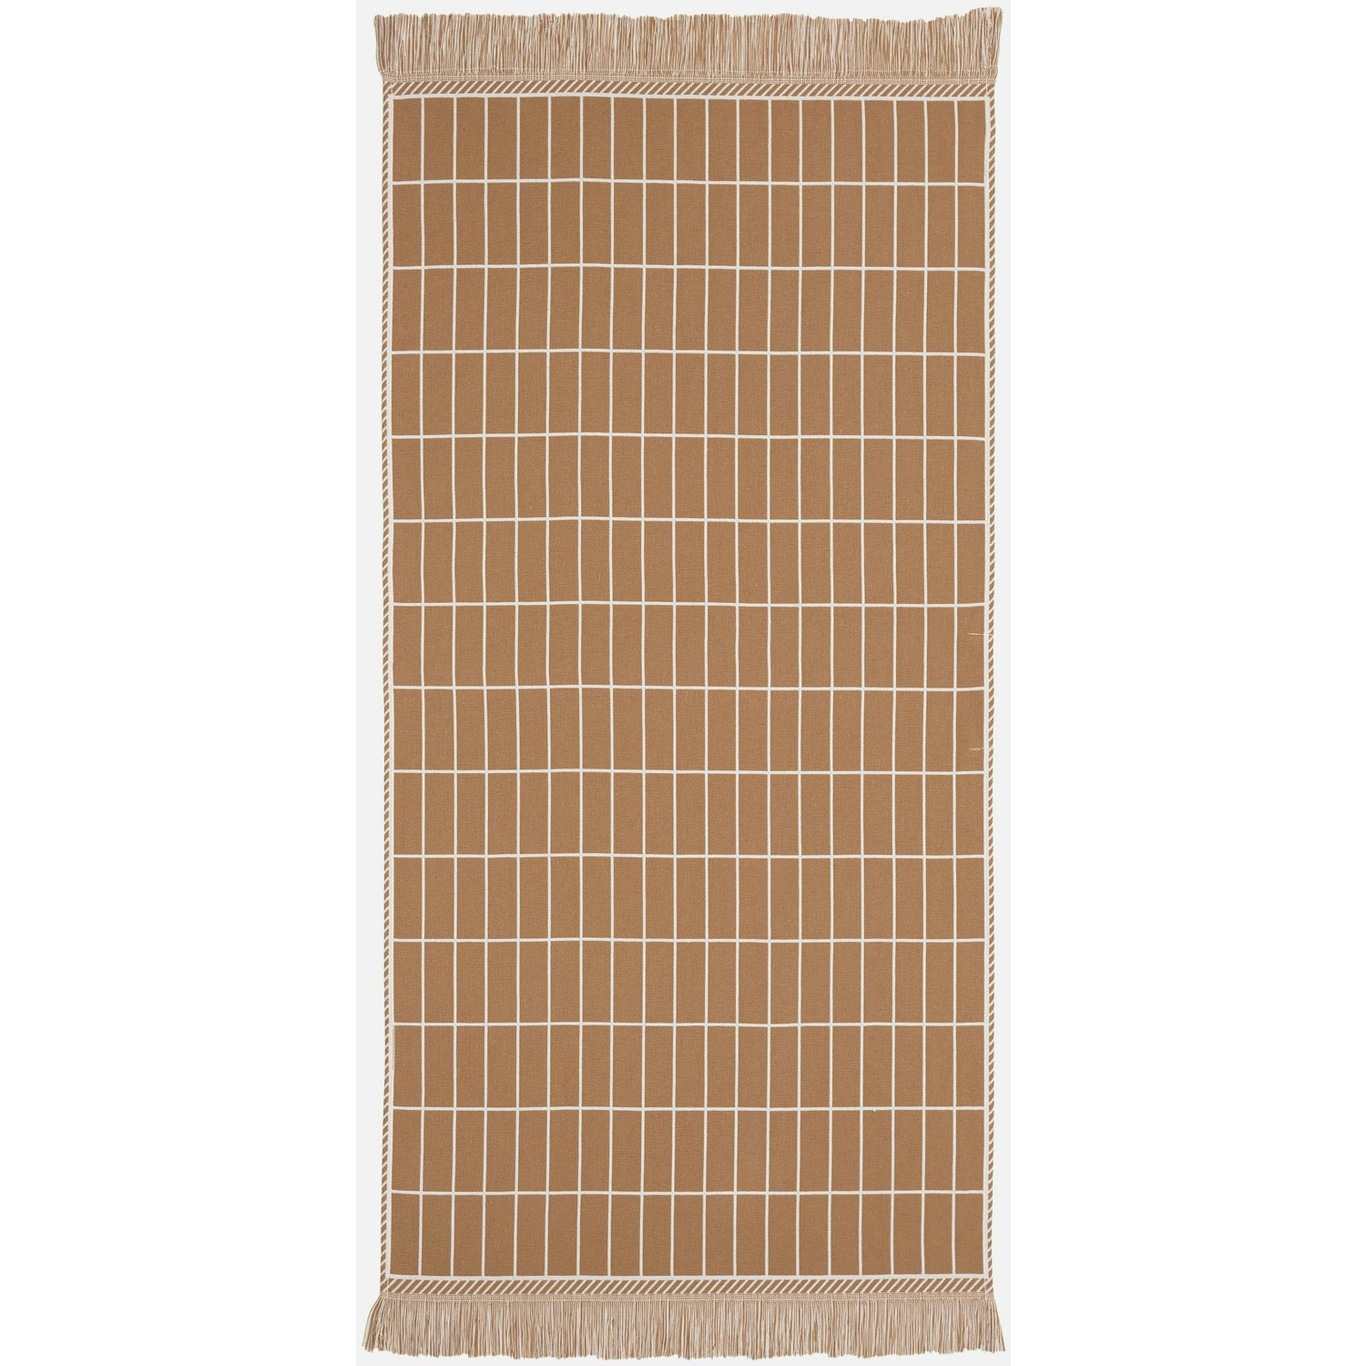 Pieni Tiiliskivi Håndklæde Hamam Brunt / Offwhite, 50x100 cm